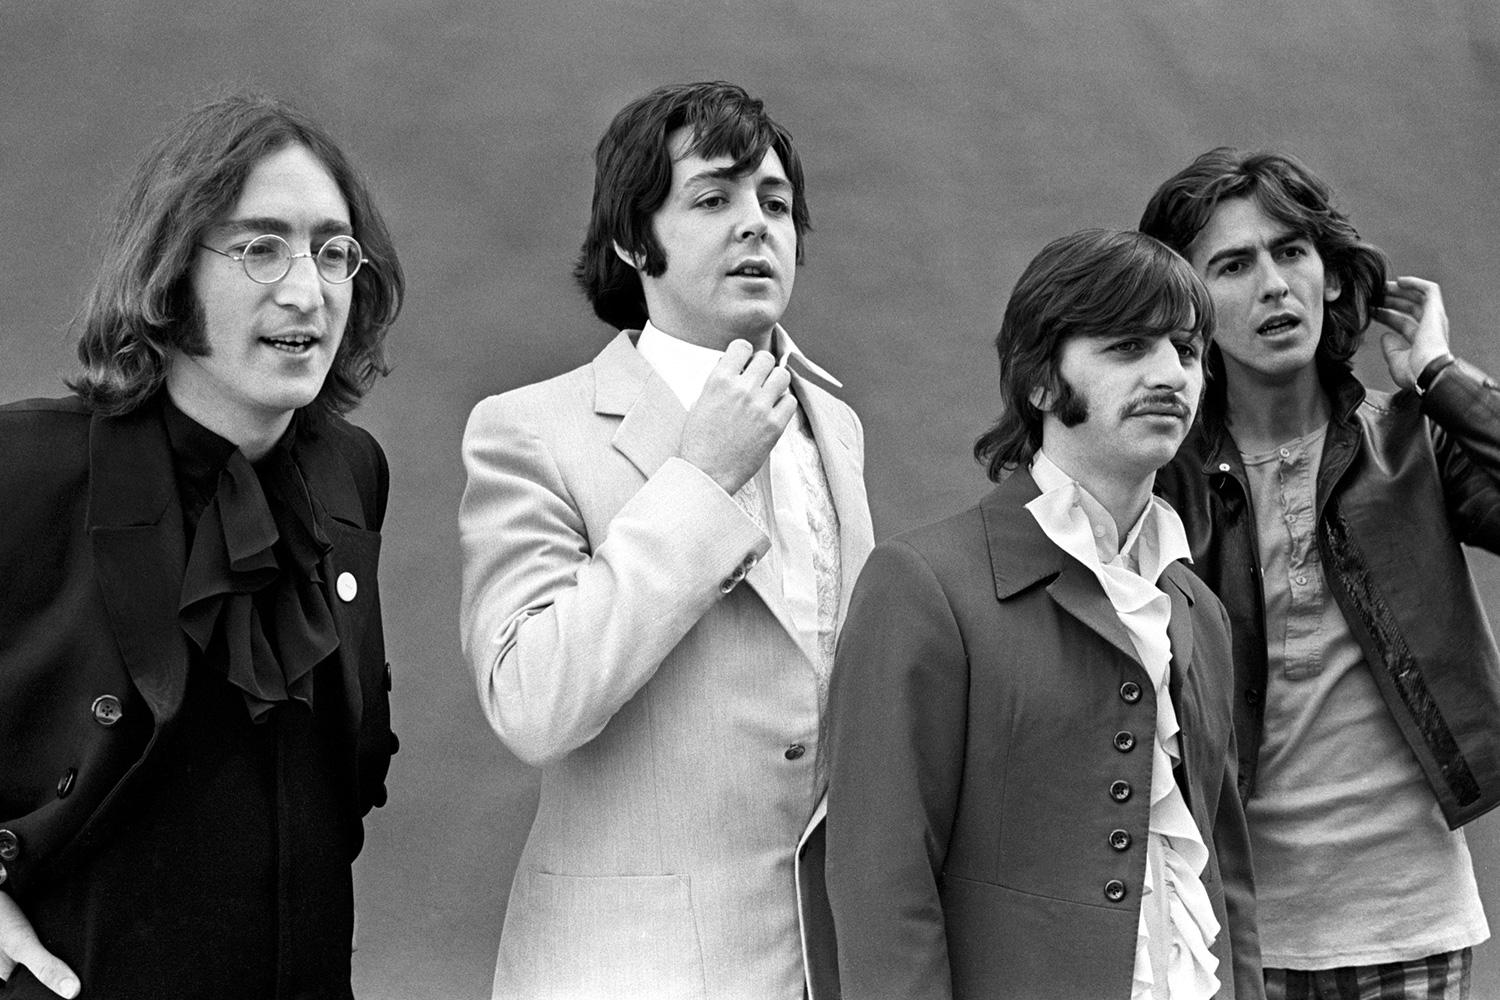 BEATLES-IN-MONO-The-Beatles-Thomson-House-London-Jul-28-1968-©-Apple-Corps-Ltd-copy